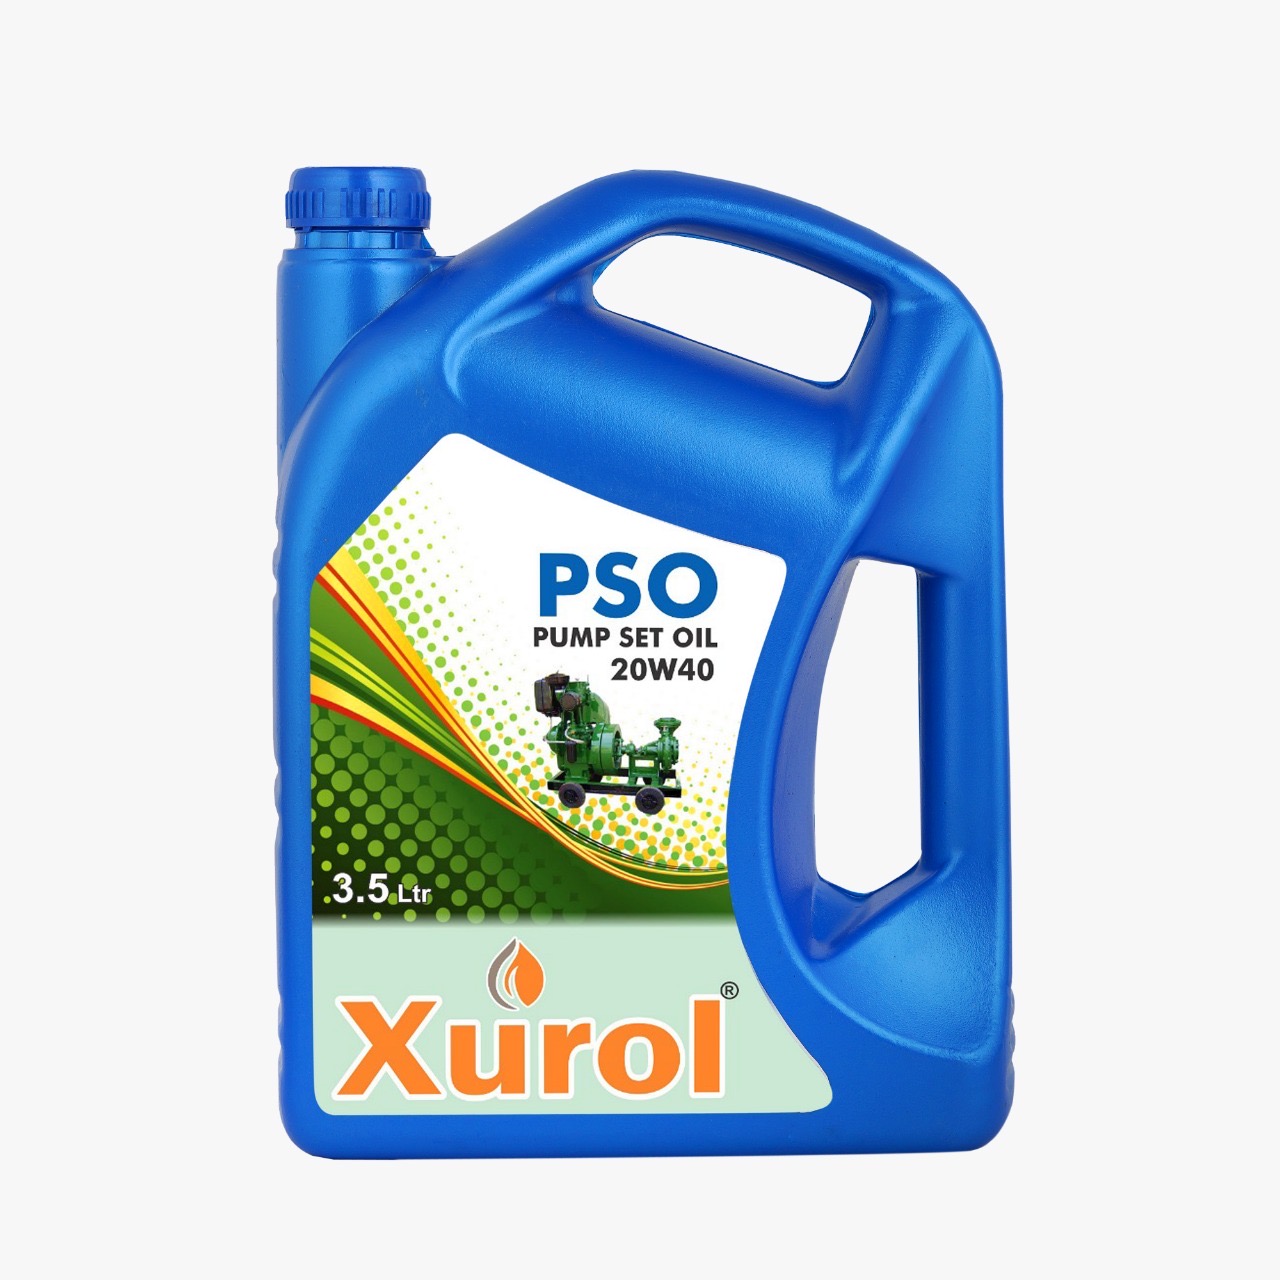 Xurol Pump Set Oil